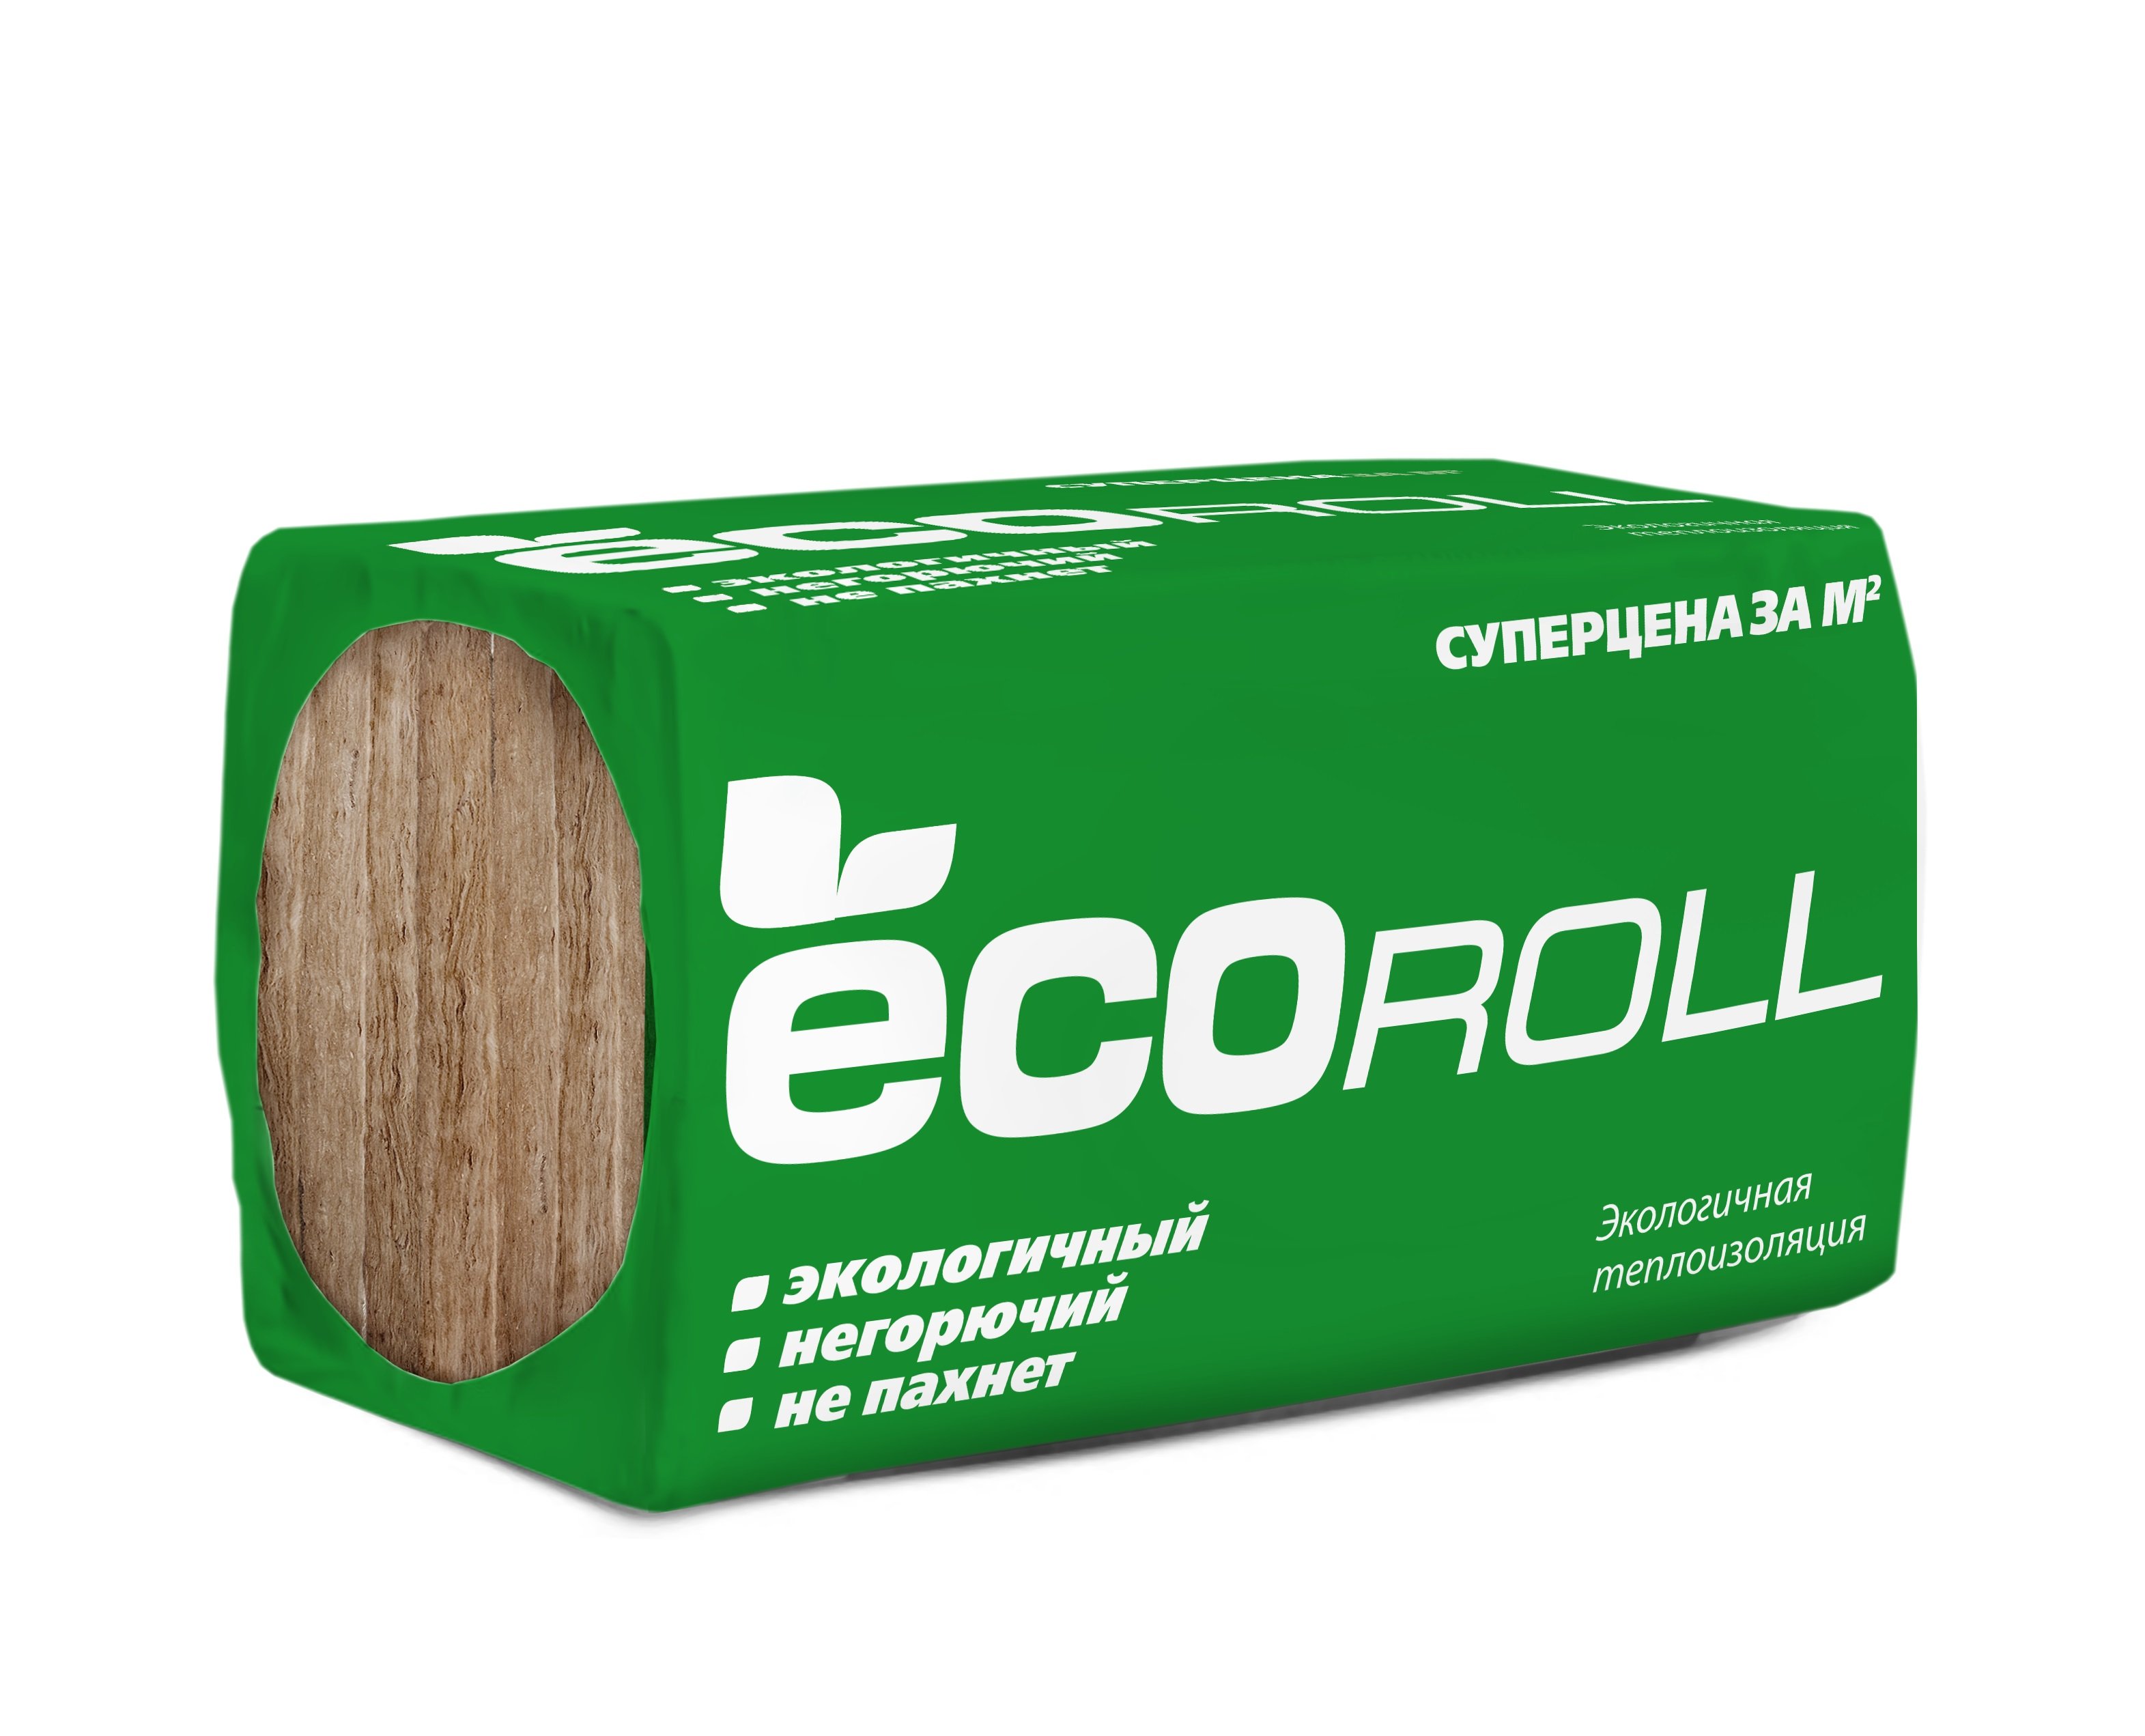 EcorollPlitaTumen